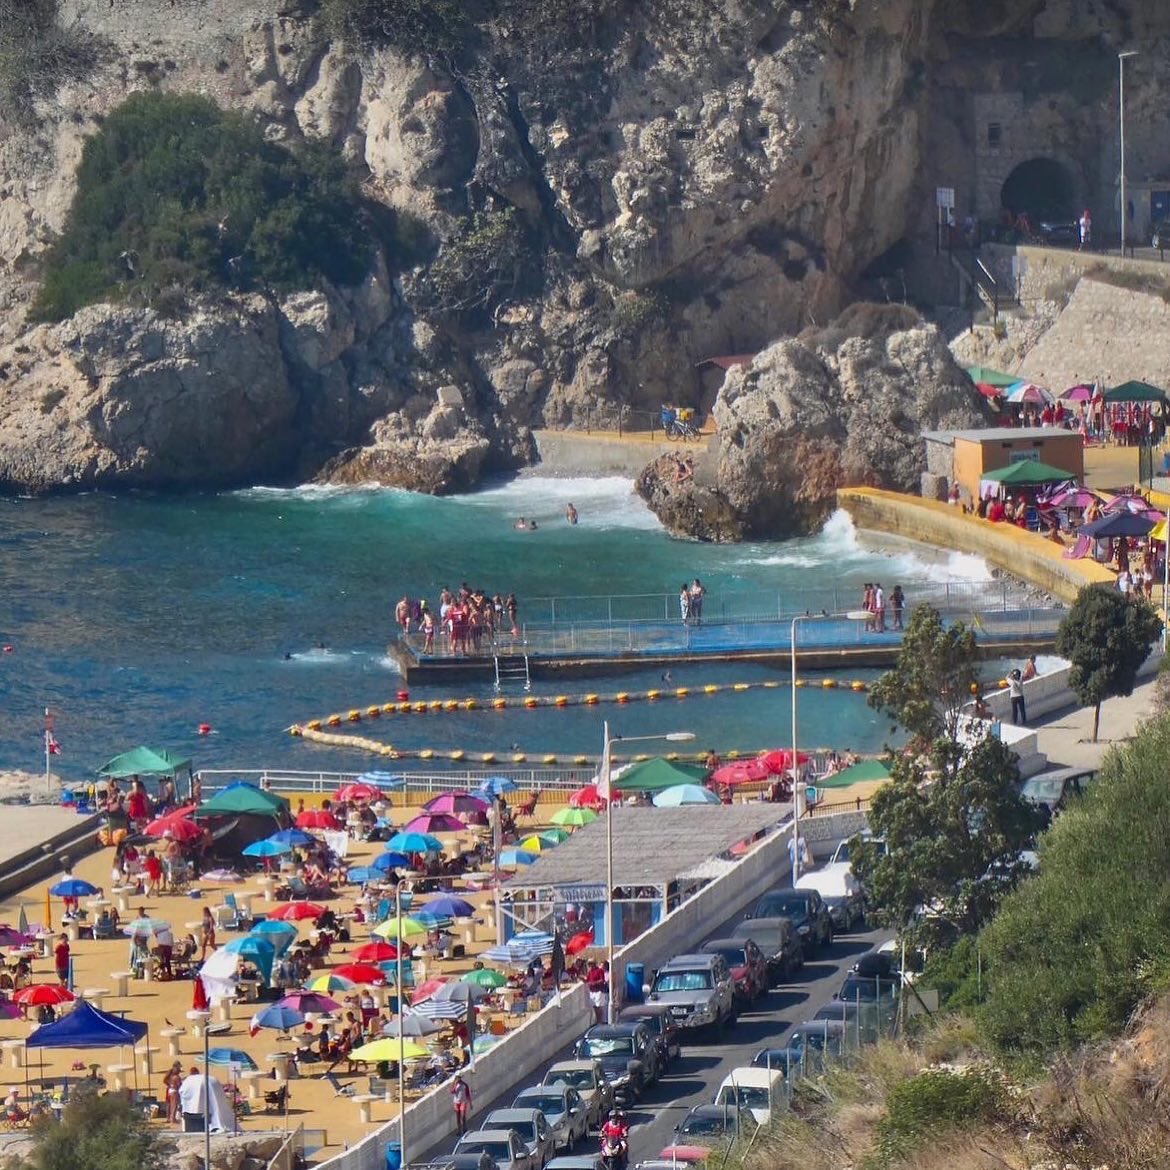 Book a getaway at mygibraltar.co.uk Image by @mariogarcia431 (IG)👌 #gibraltar #mygibraltar #visitgibraltar #rockofgibraltar #campbaygibraltar #summerholidays #holiday #summerbreak #getaway #mediterranean